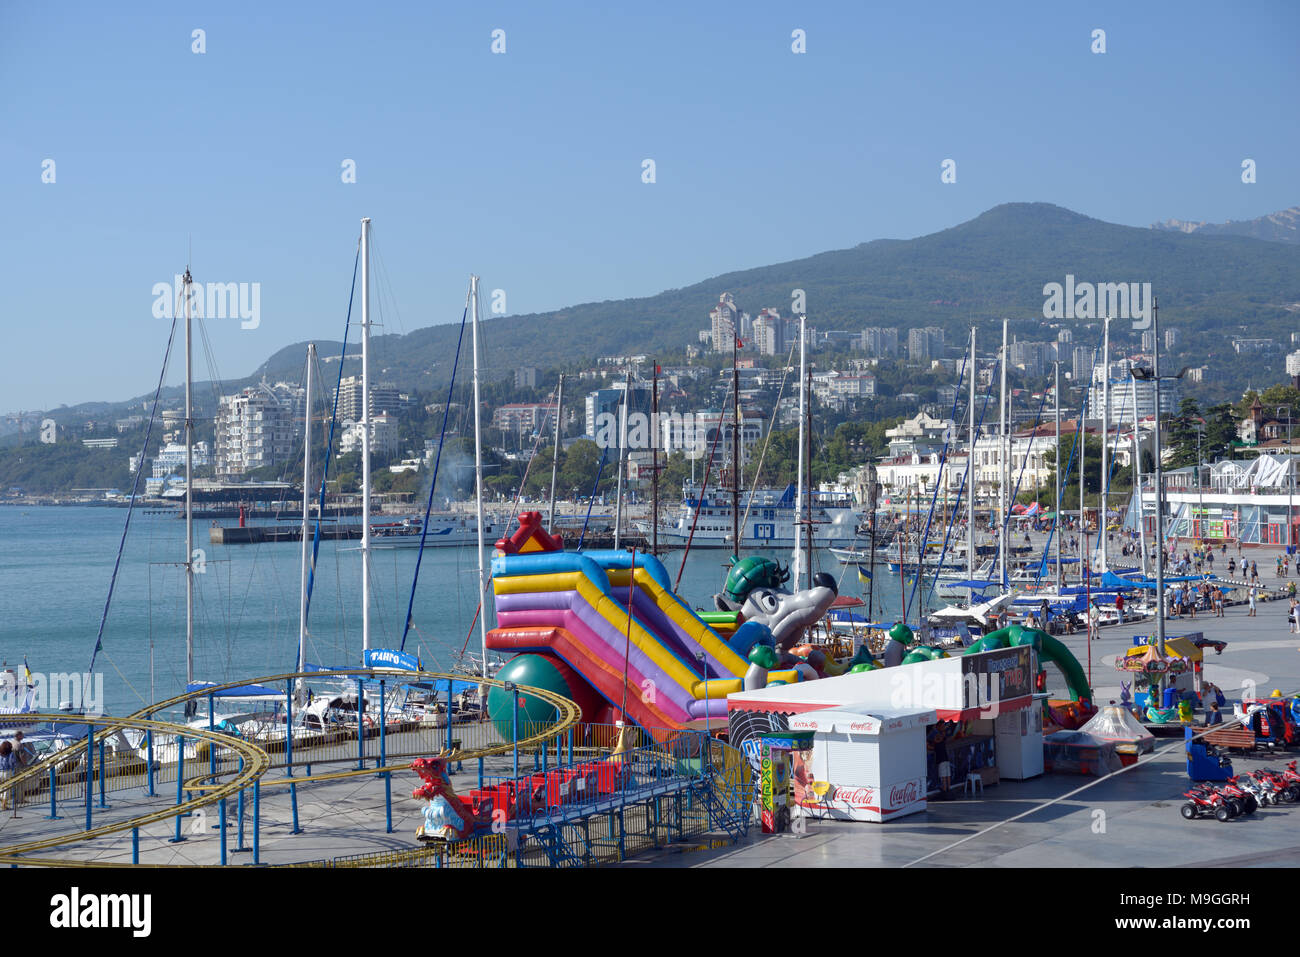 Amusement attractions in the port of Yalta, Crimea, Ukraine Stock Photo